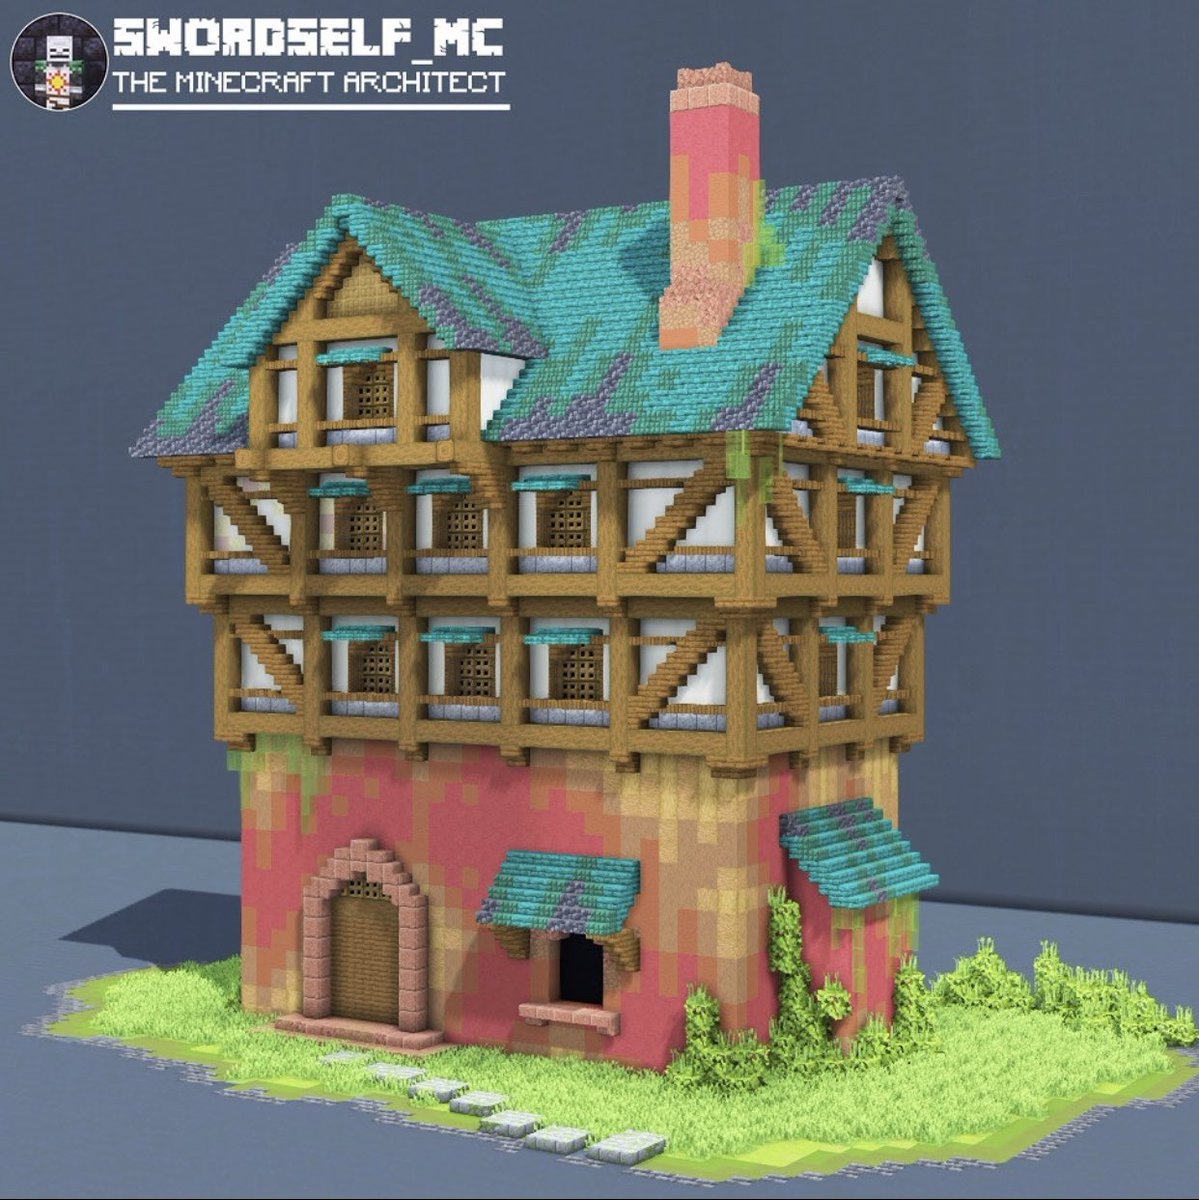 Red and blue house built by @Swordself_MC #minecraft建築コミュ #MinecraftServer #minecraftbuilds #Minecraft